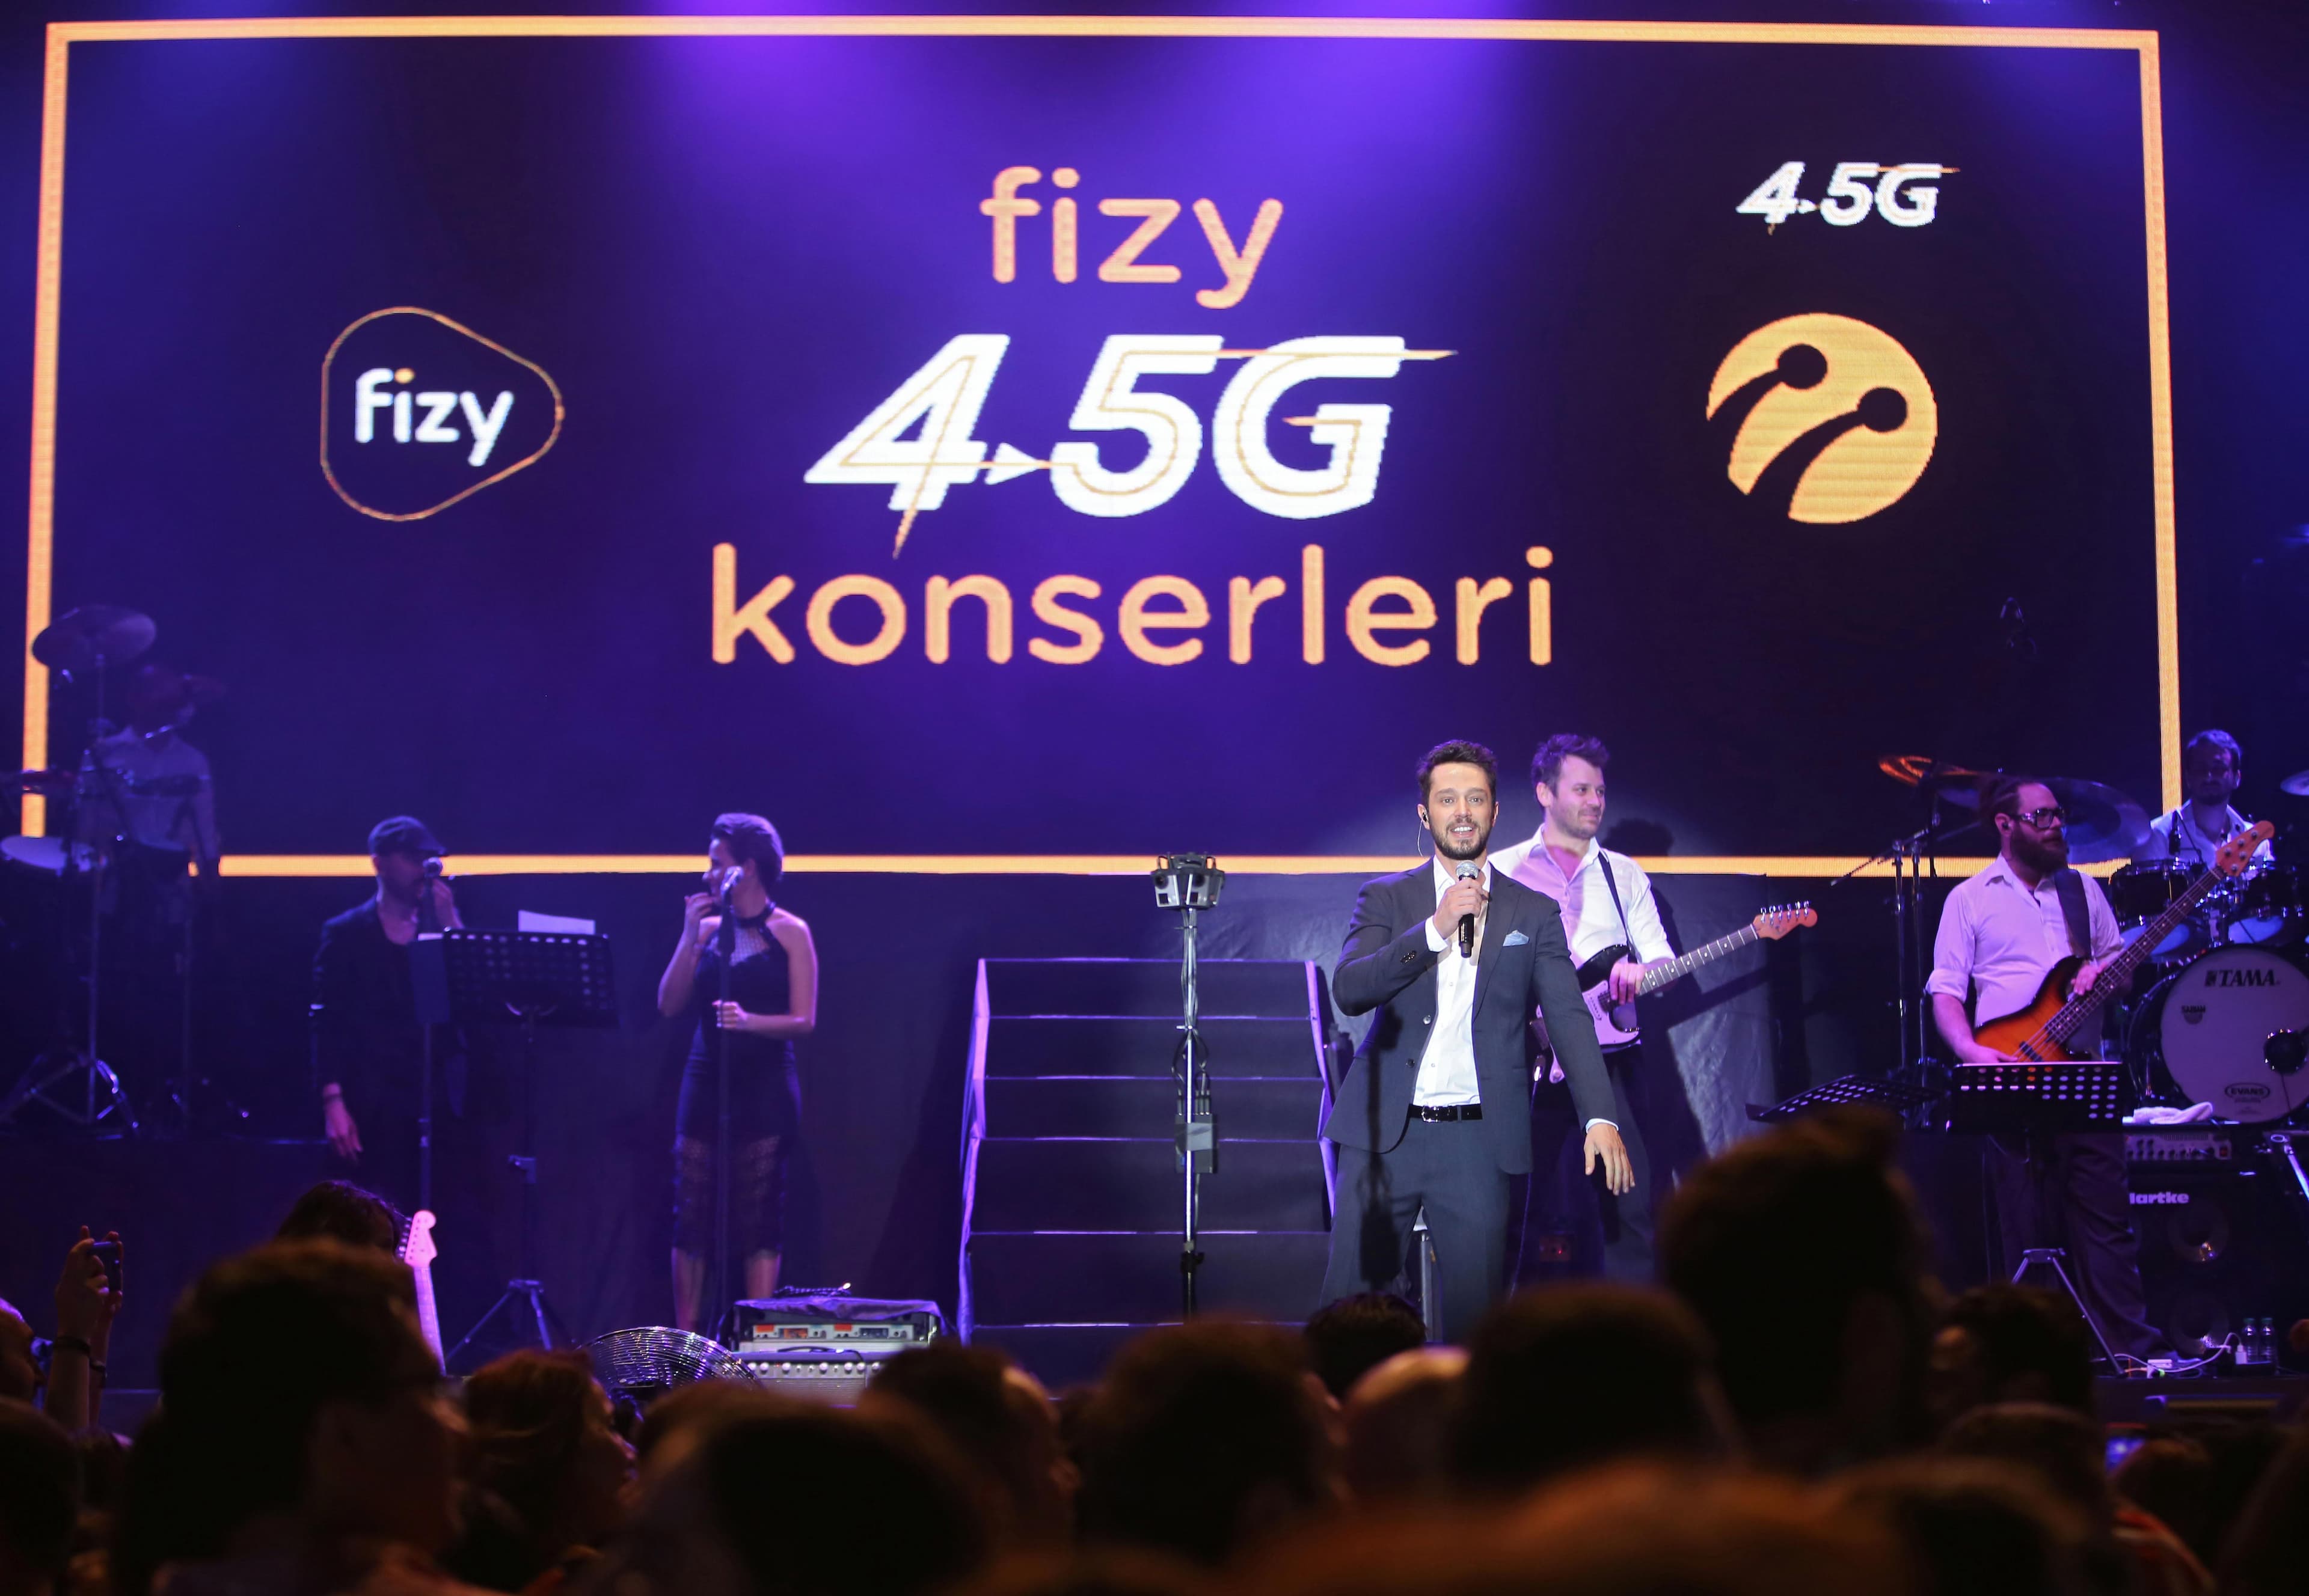 Fizy 4.5G Konserleri - 1